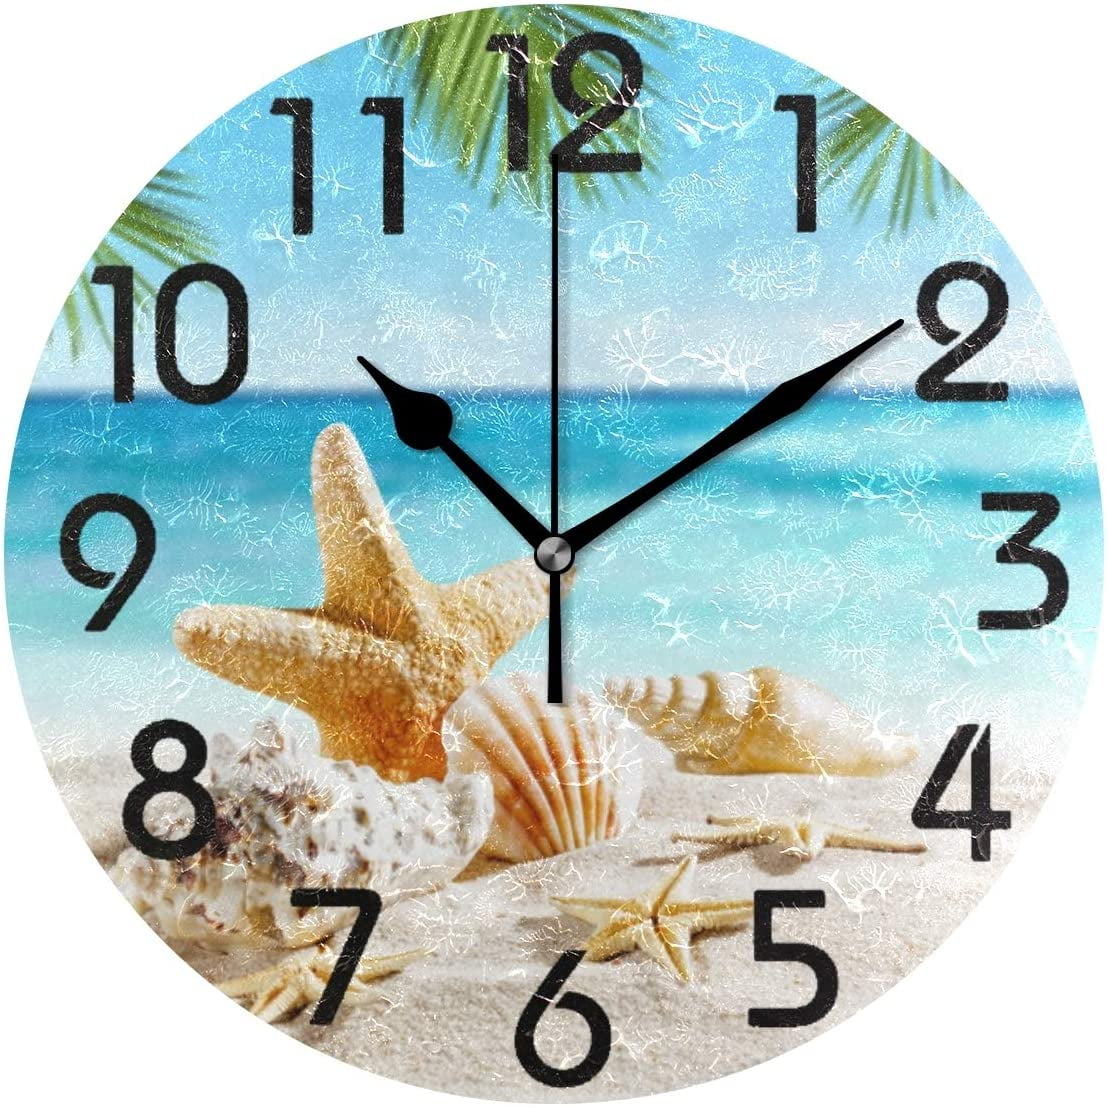 Starfish on The Beach Sand Wall Clock 9.5 Inch Non-Ticking Silent Clocks Round Bathroom Clock Battery Operated Quartz Analog Decorative Desk Clock for Living Room